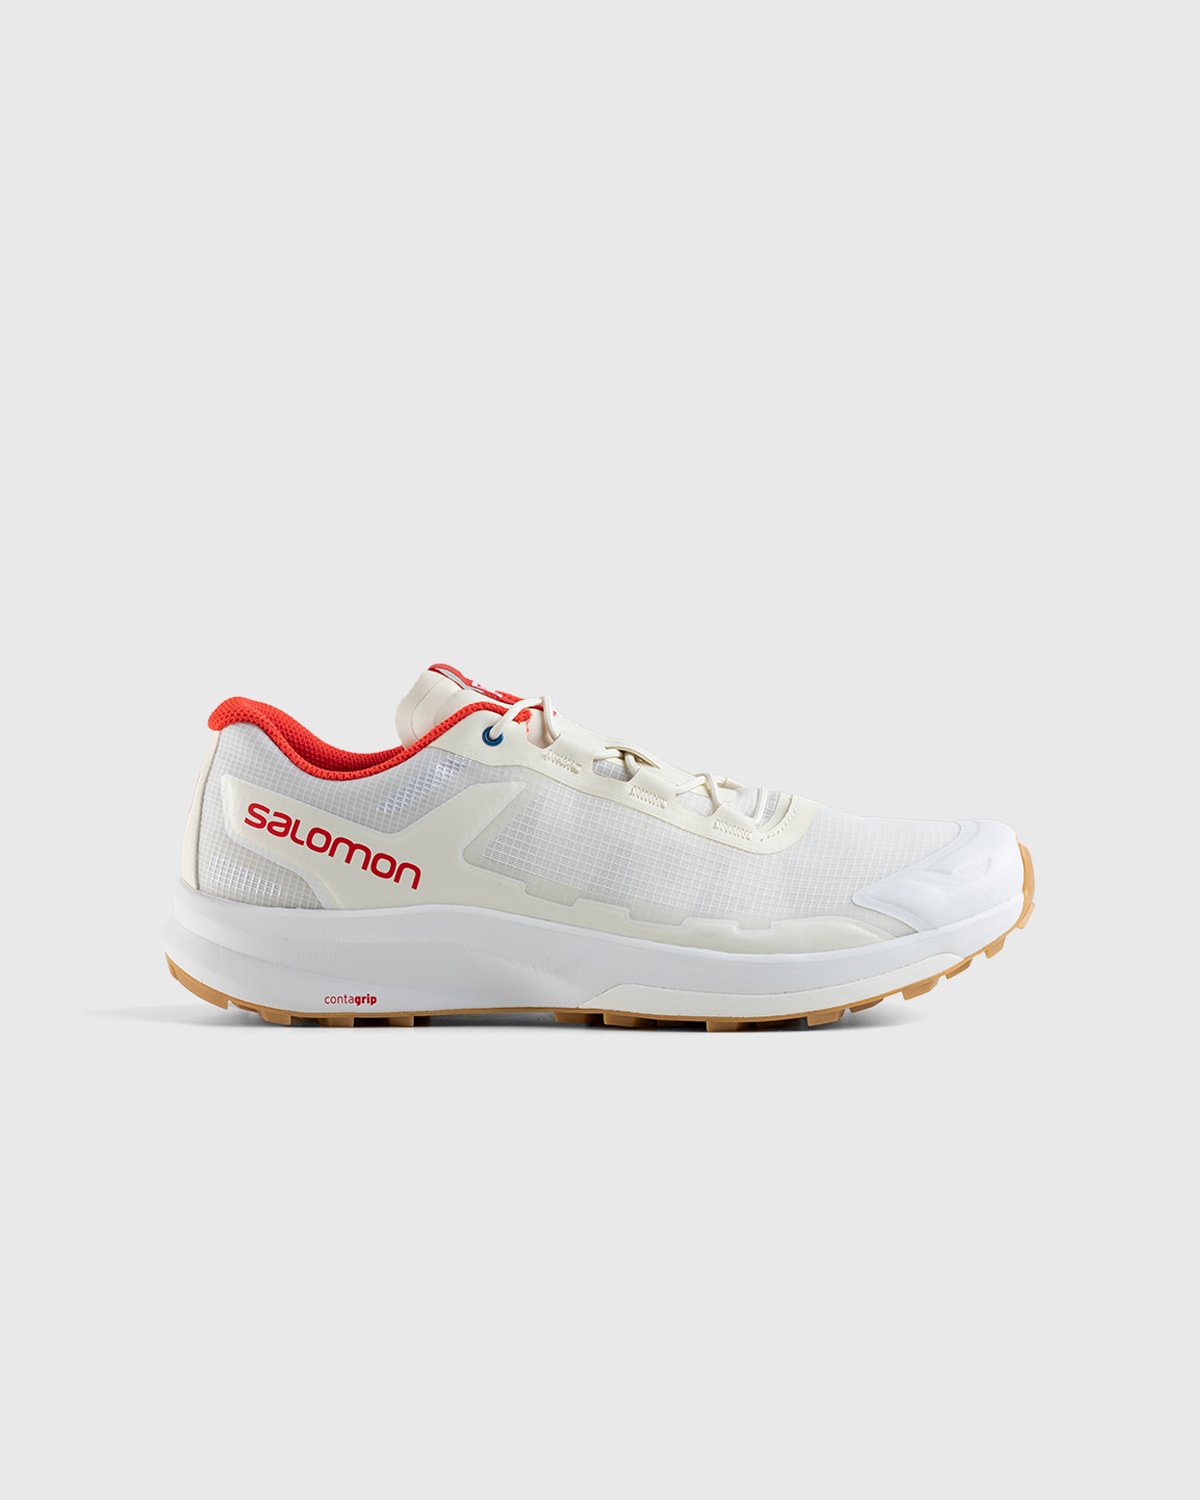 Copson x Salomon - Ultra Raid White/Red - Footwear - White - Image 1